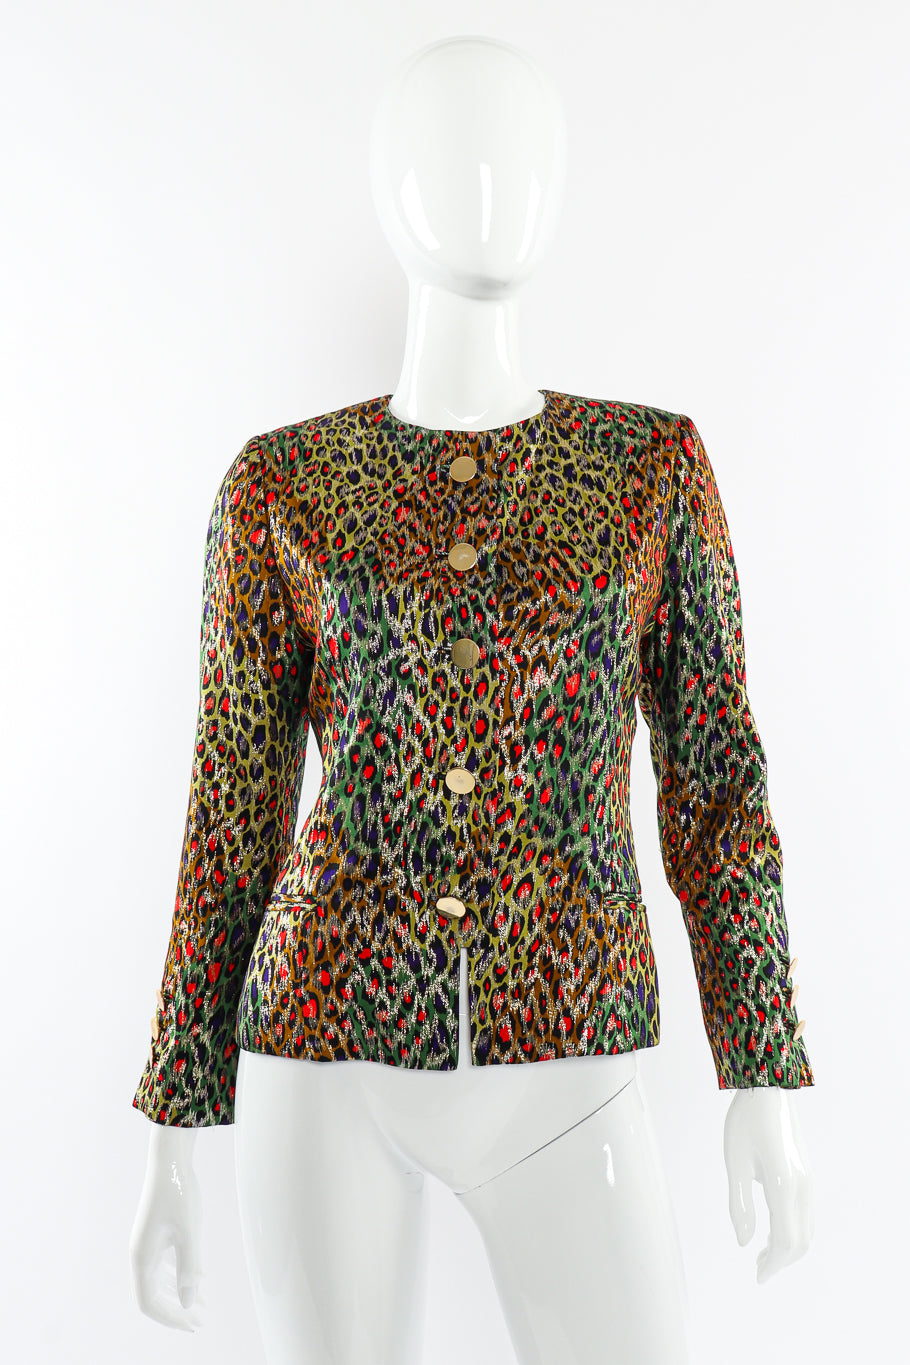 Vintage Bill Blass Leopard Print Silk Jacket front view on mannequin @Recessla